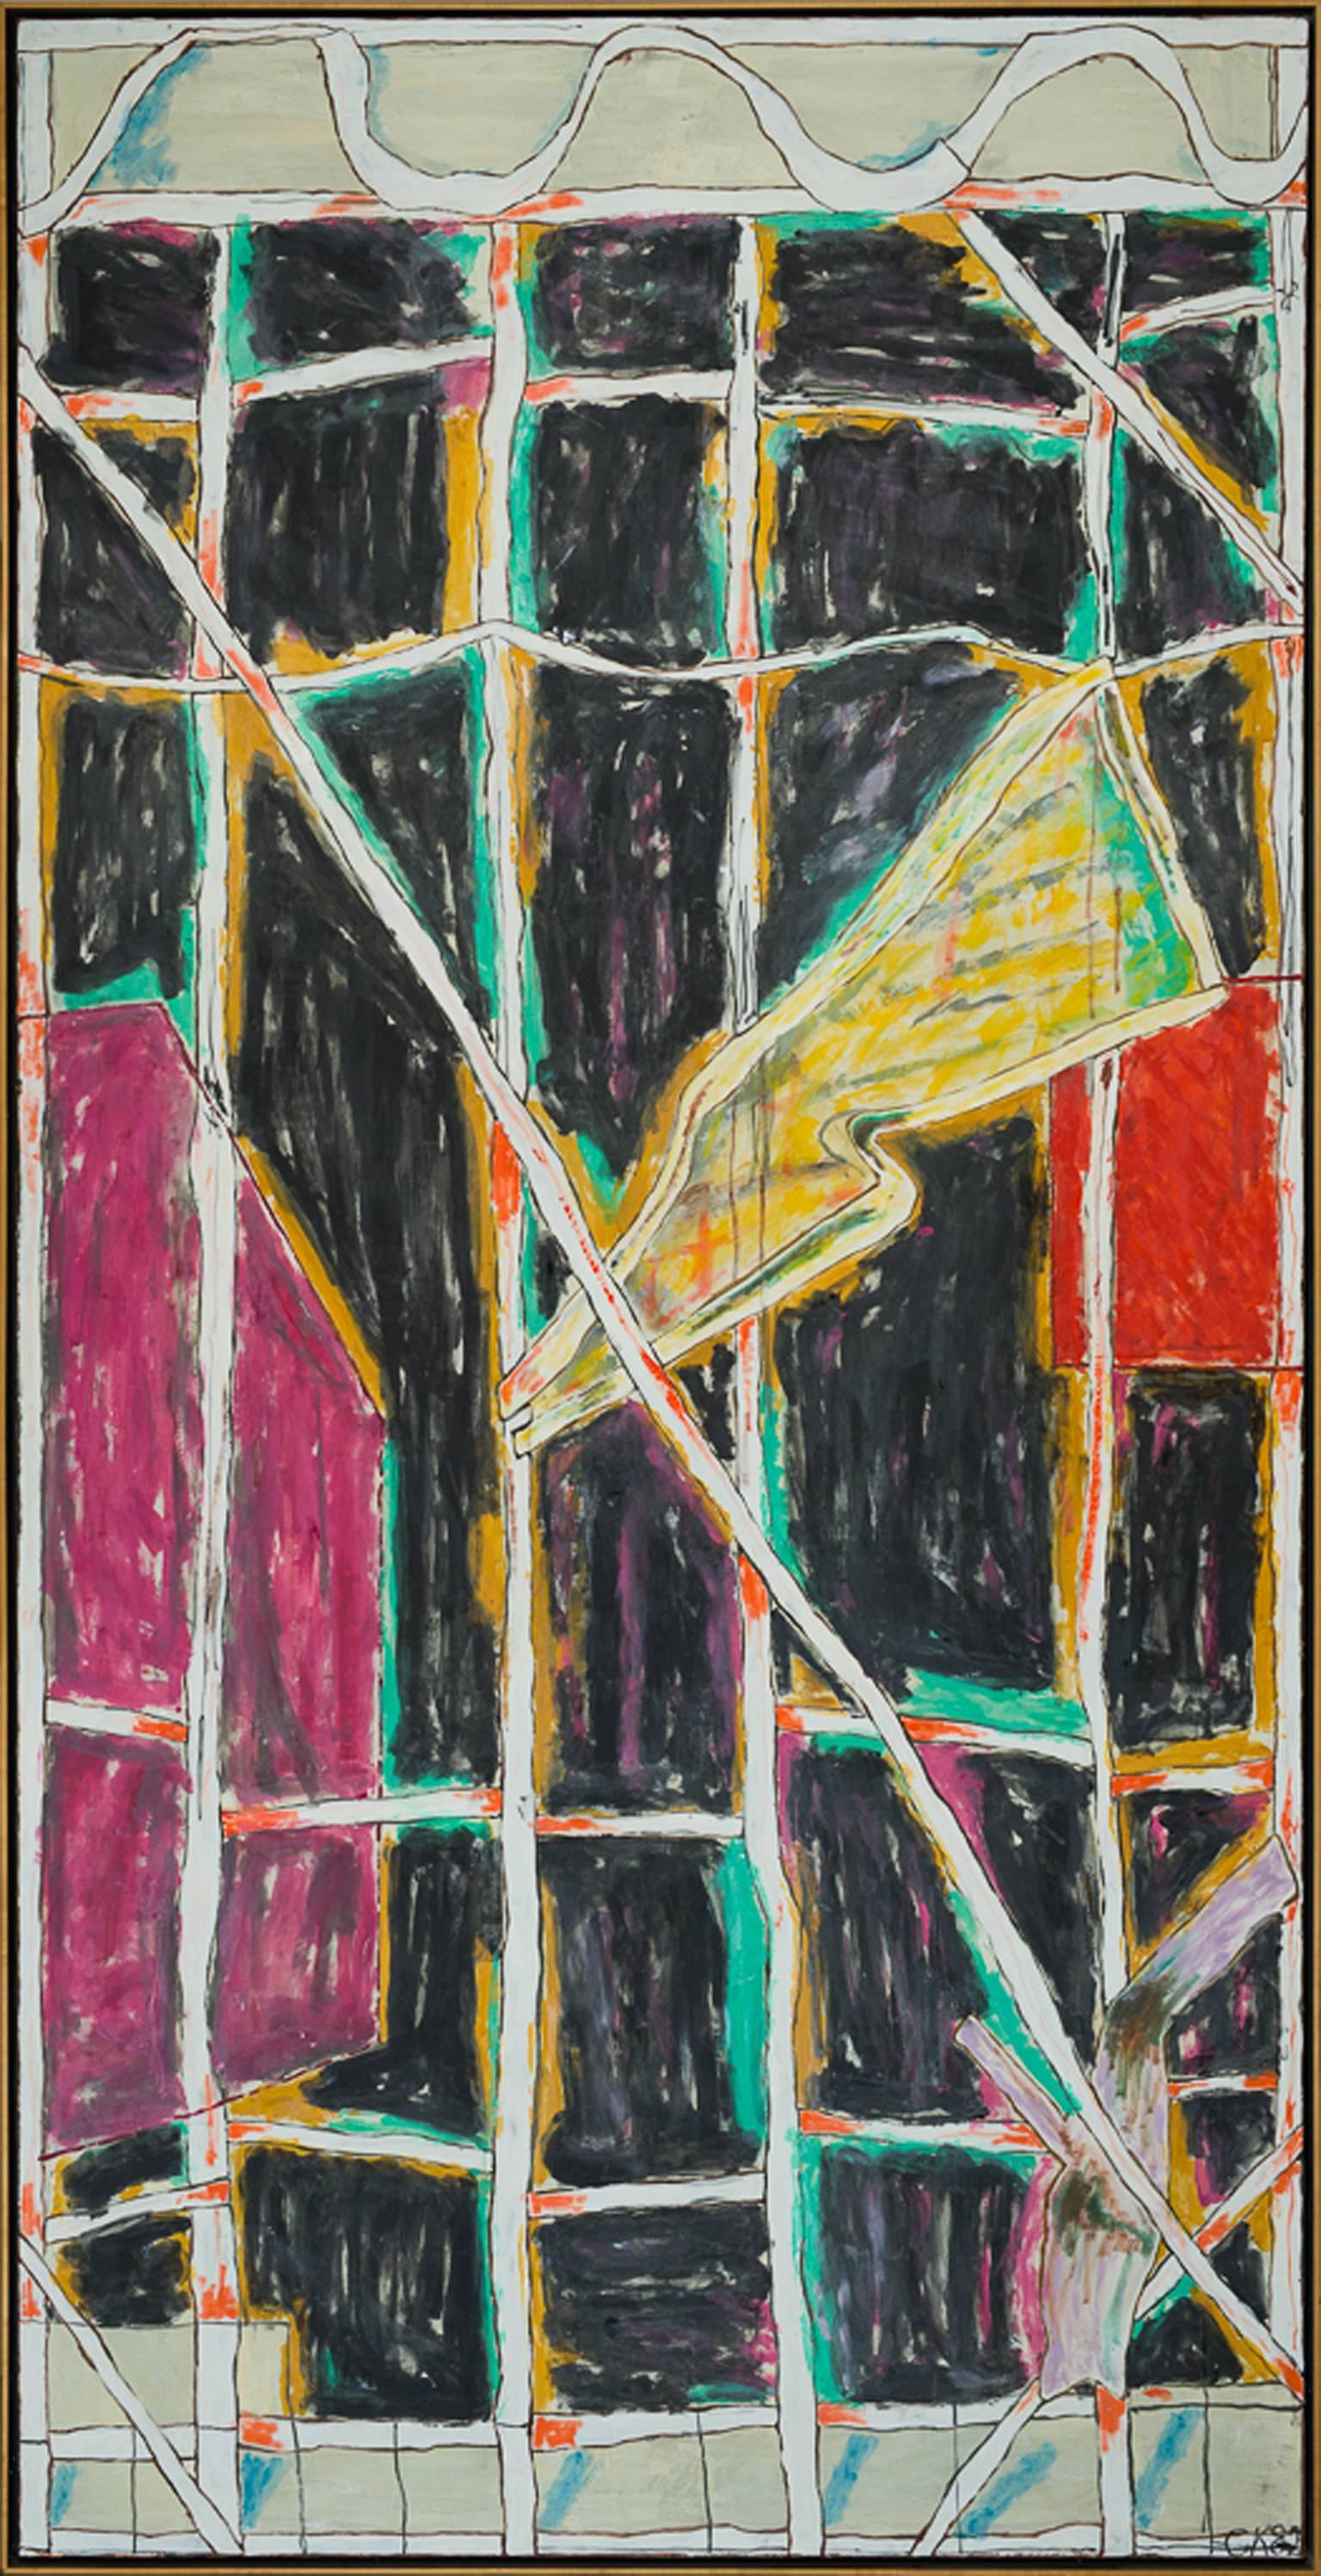 Phantom - Red, Yellow, Black, Green, White, Blue, Magenta & Ochre - 10 Feet Tall - Painting by Craig Kauffman